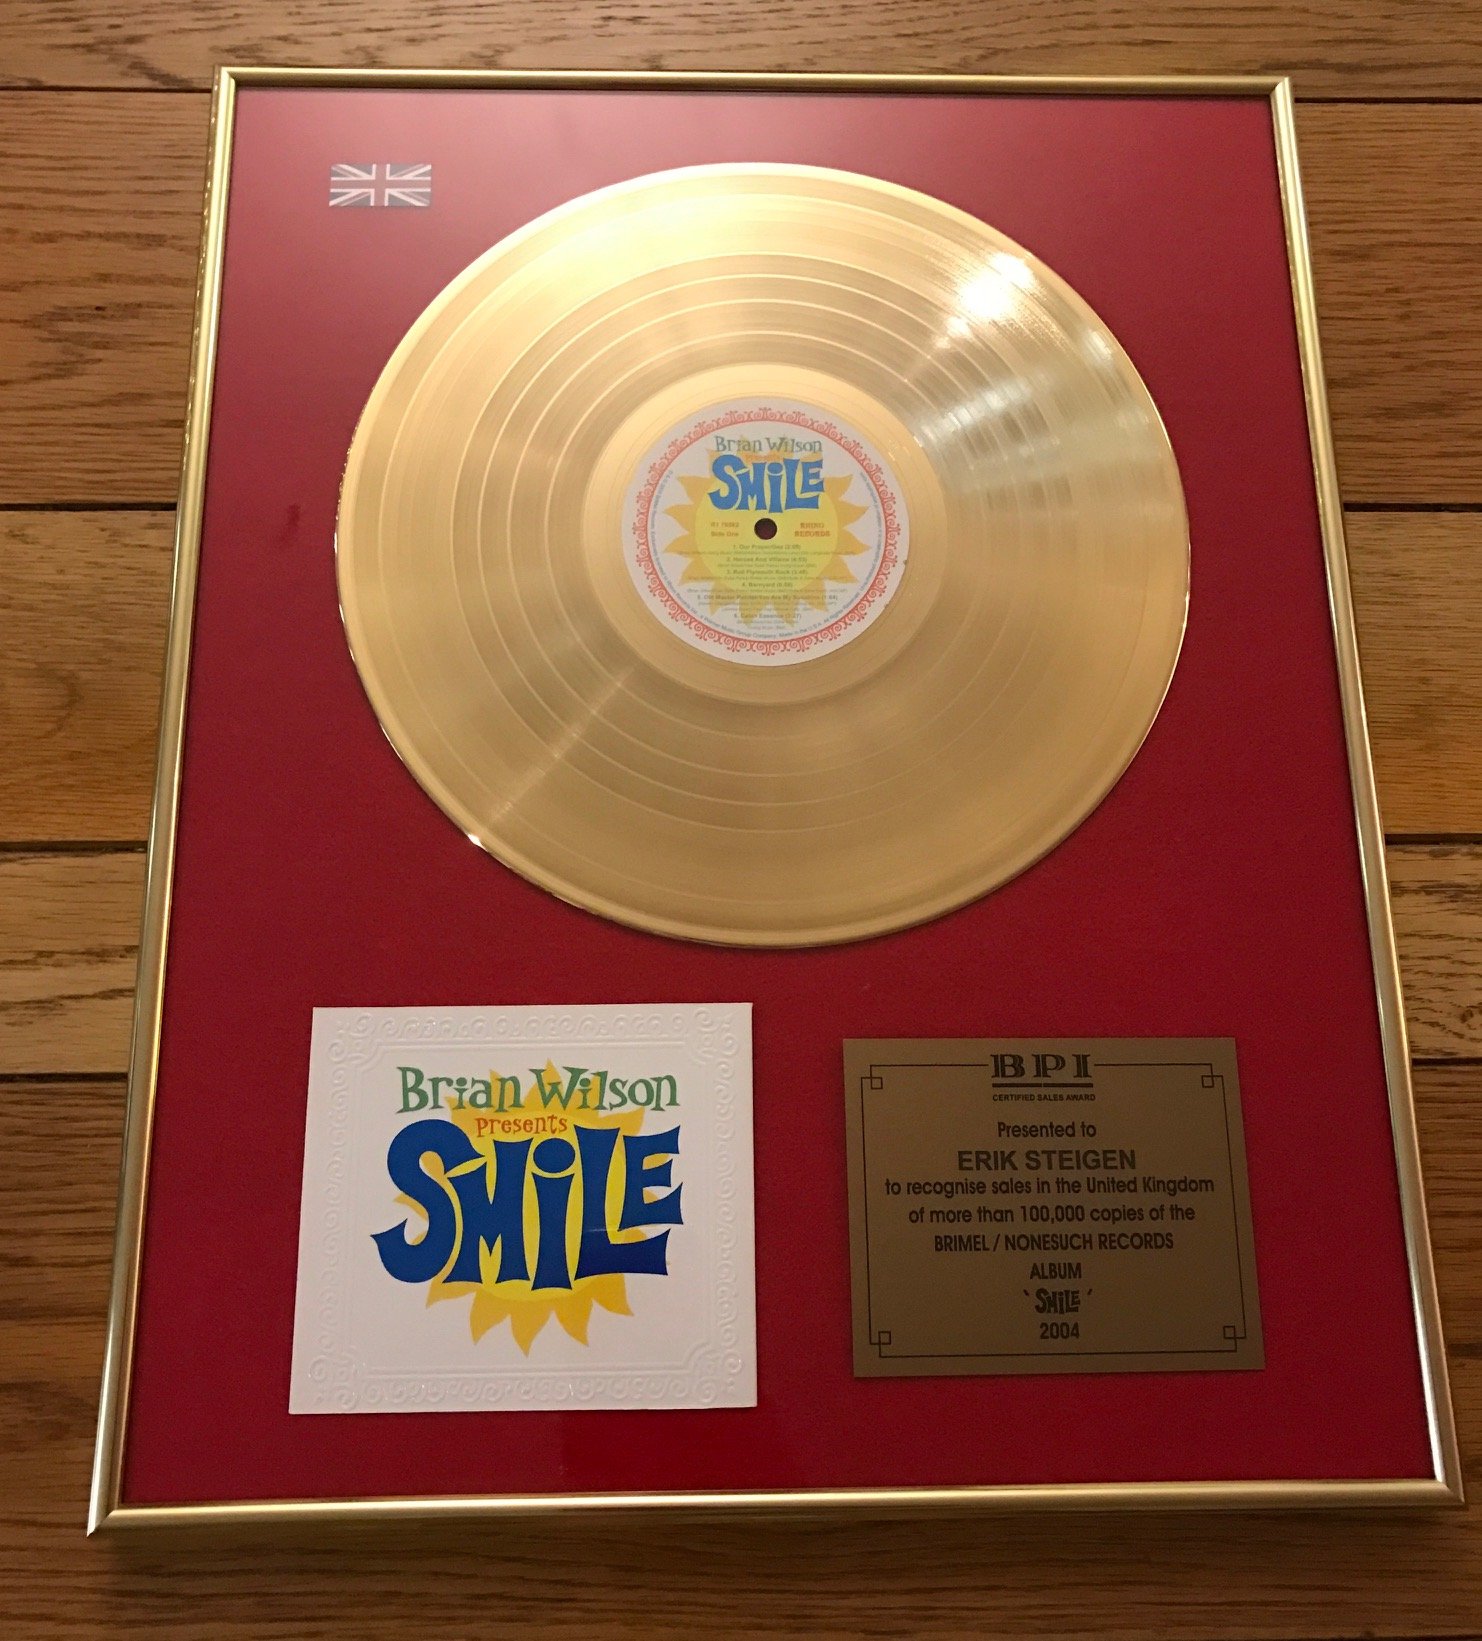 Brian Wilson Smile UK plaque.jpg